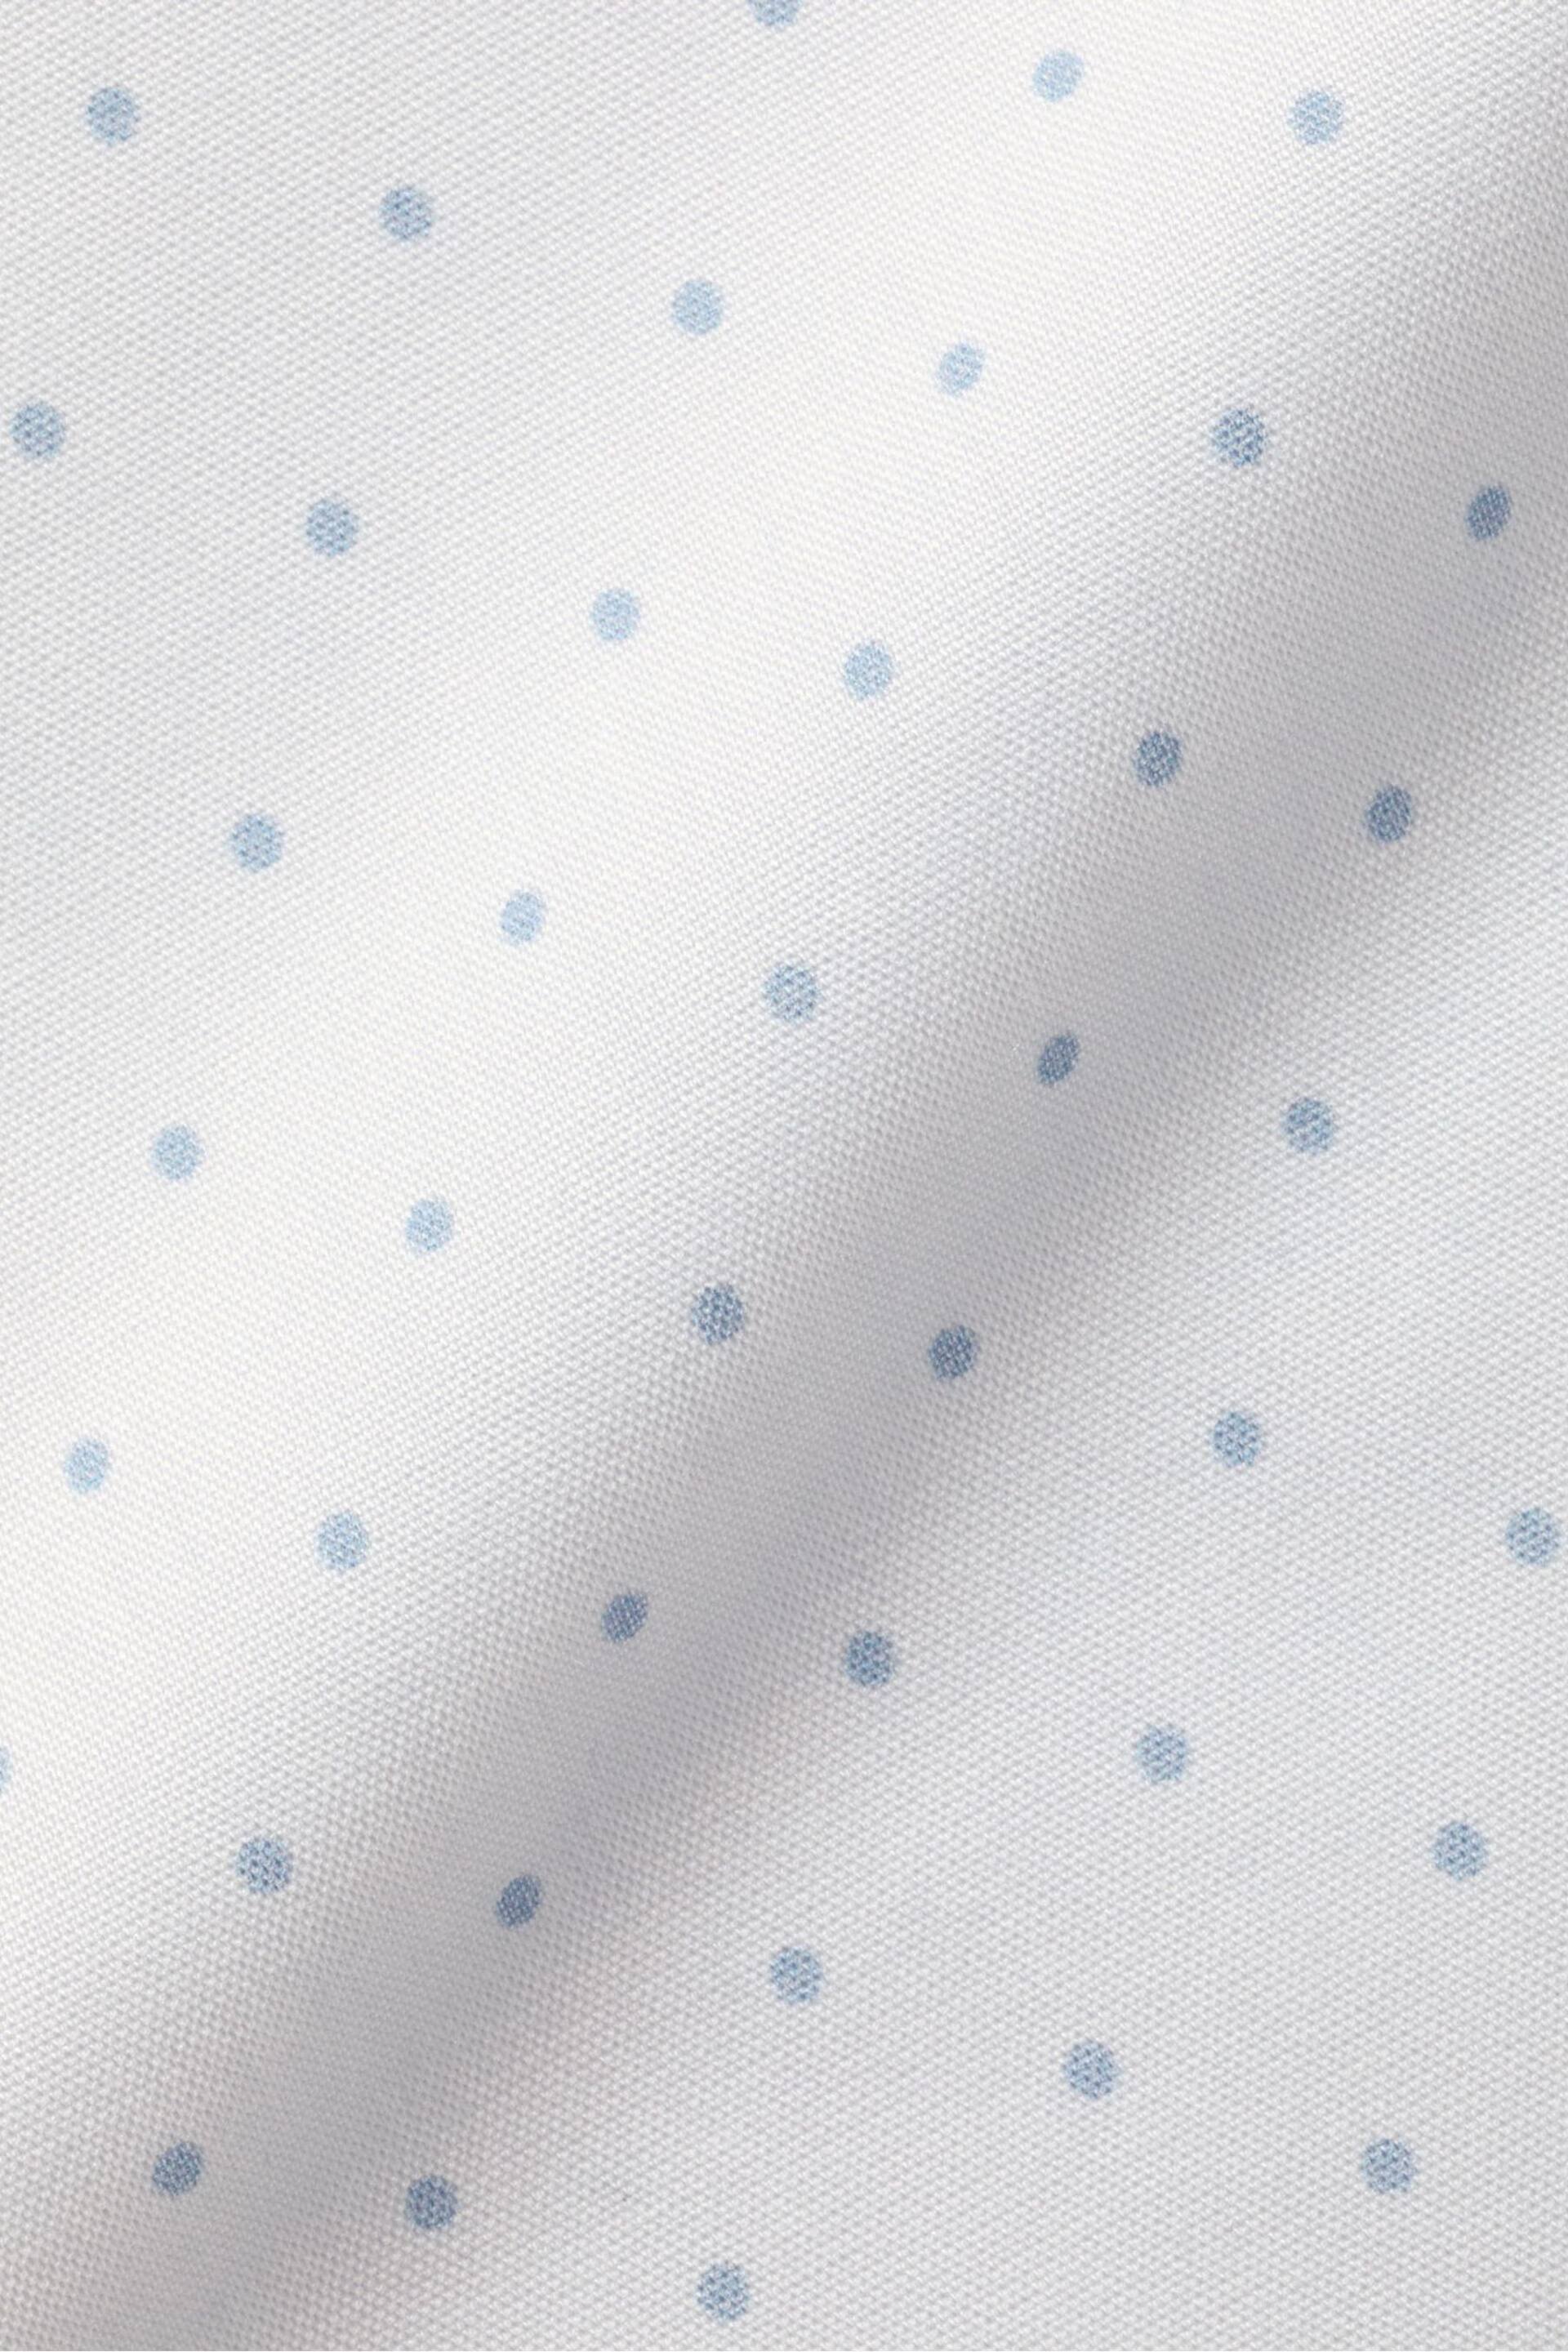 Charles Tyrwhitt White Slim Fit Spot Non-Iron Print Shirt - Image 5 of 5